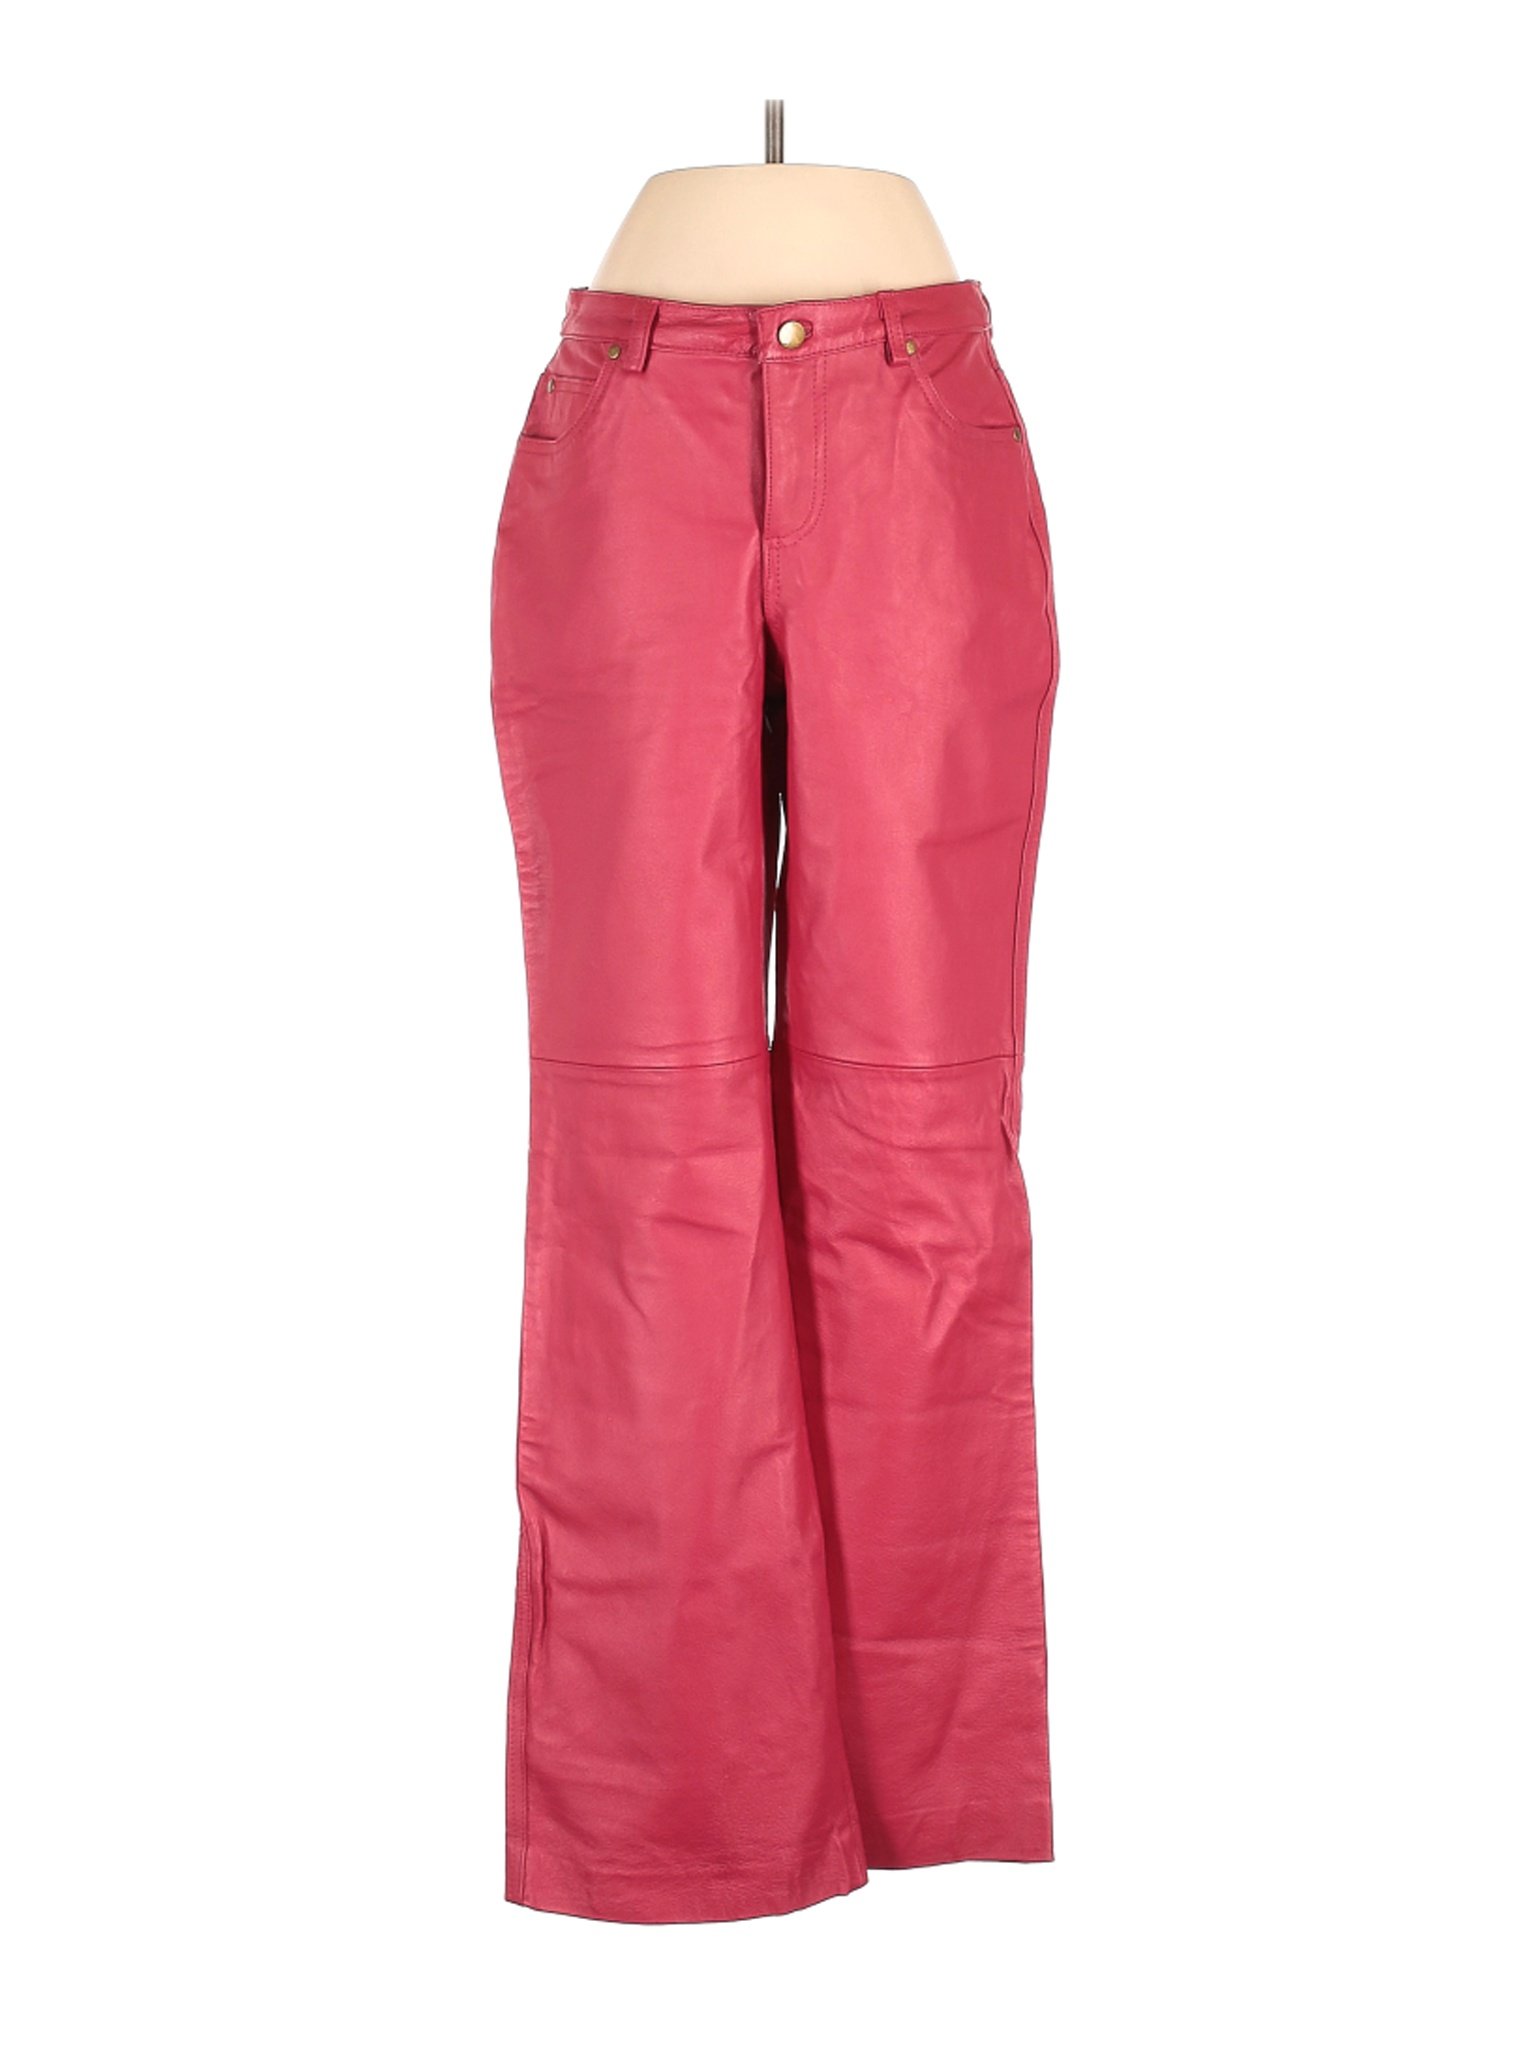 Metro Style Women Pink Leather Pants 4 | eBay